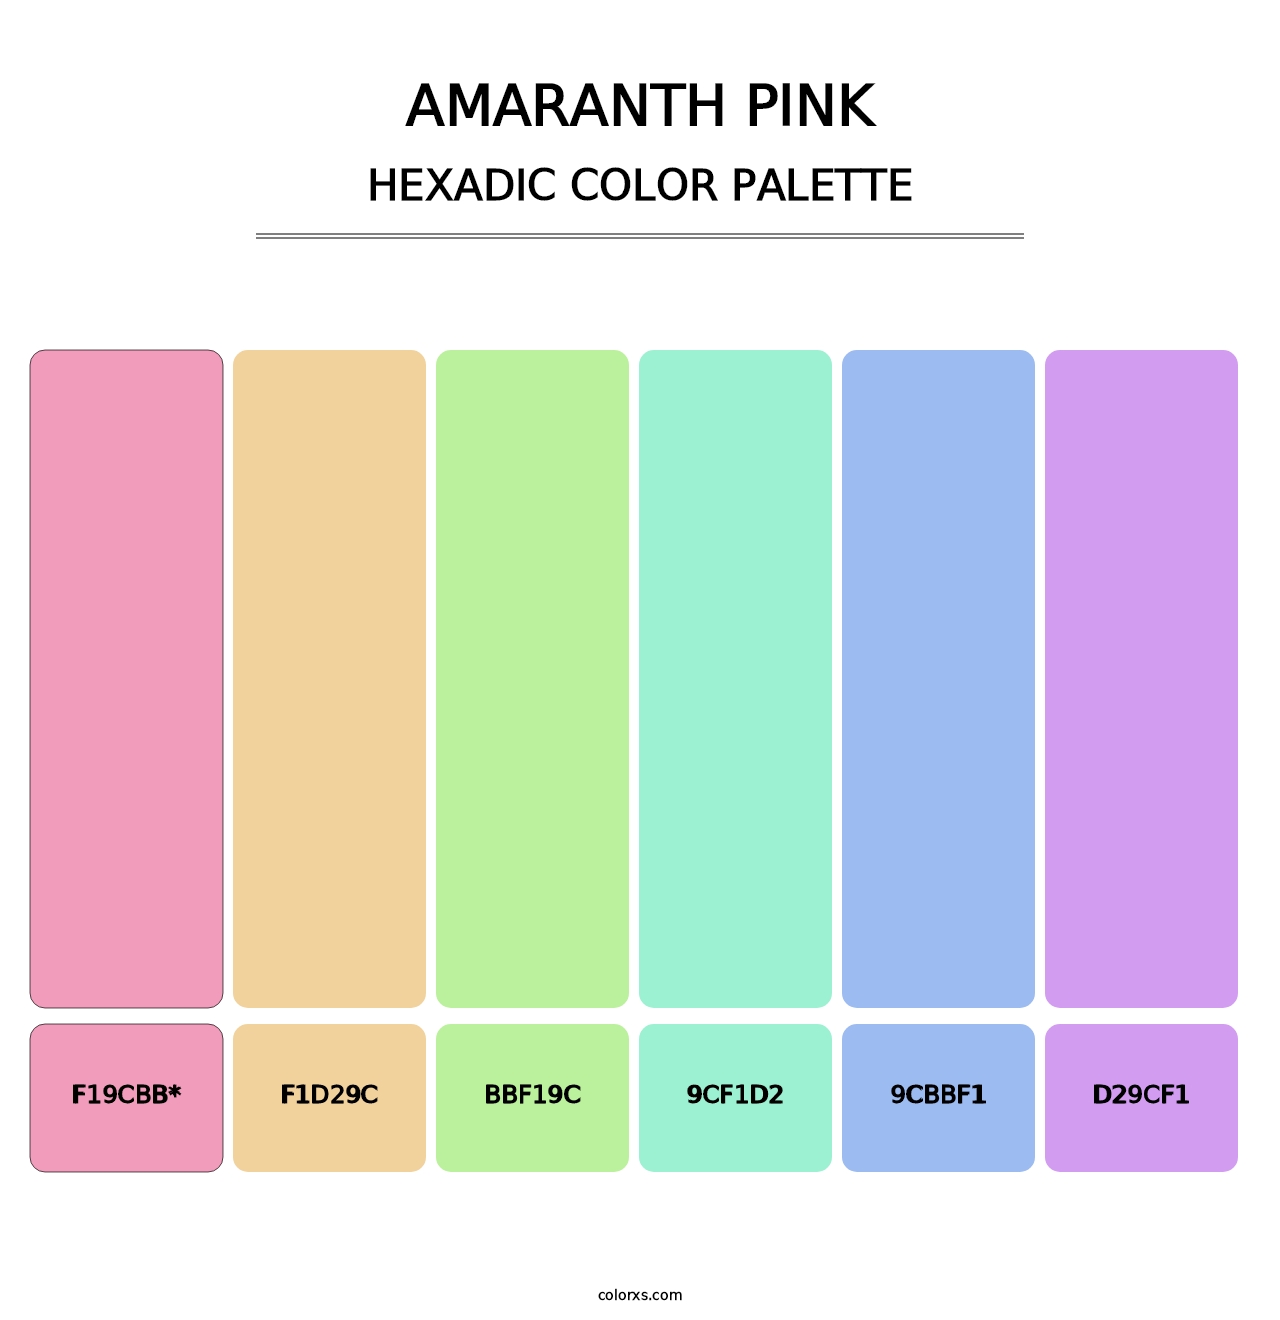 Amaranth Pink - Hexadic Color Palette